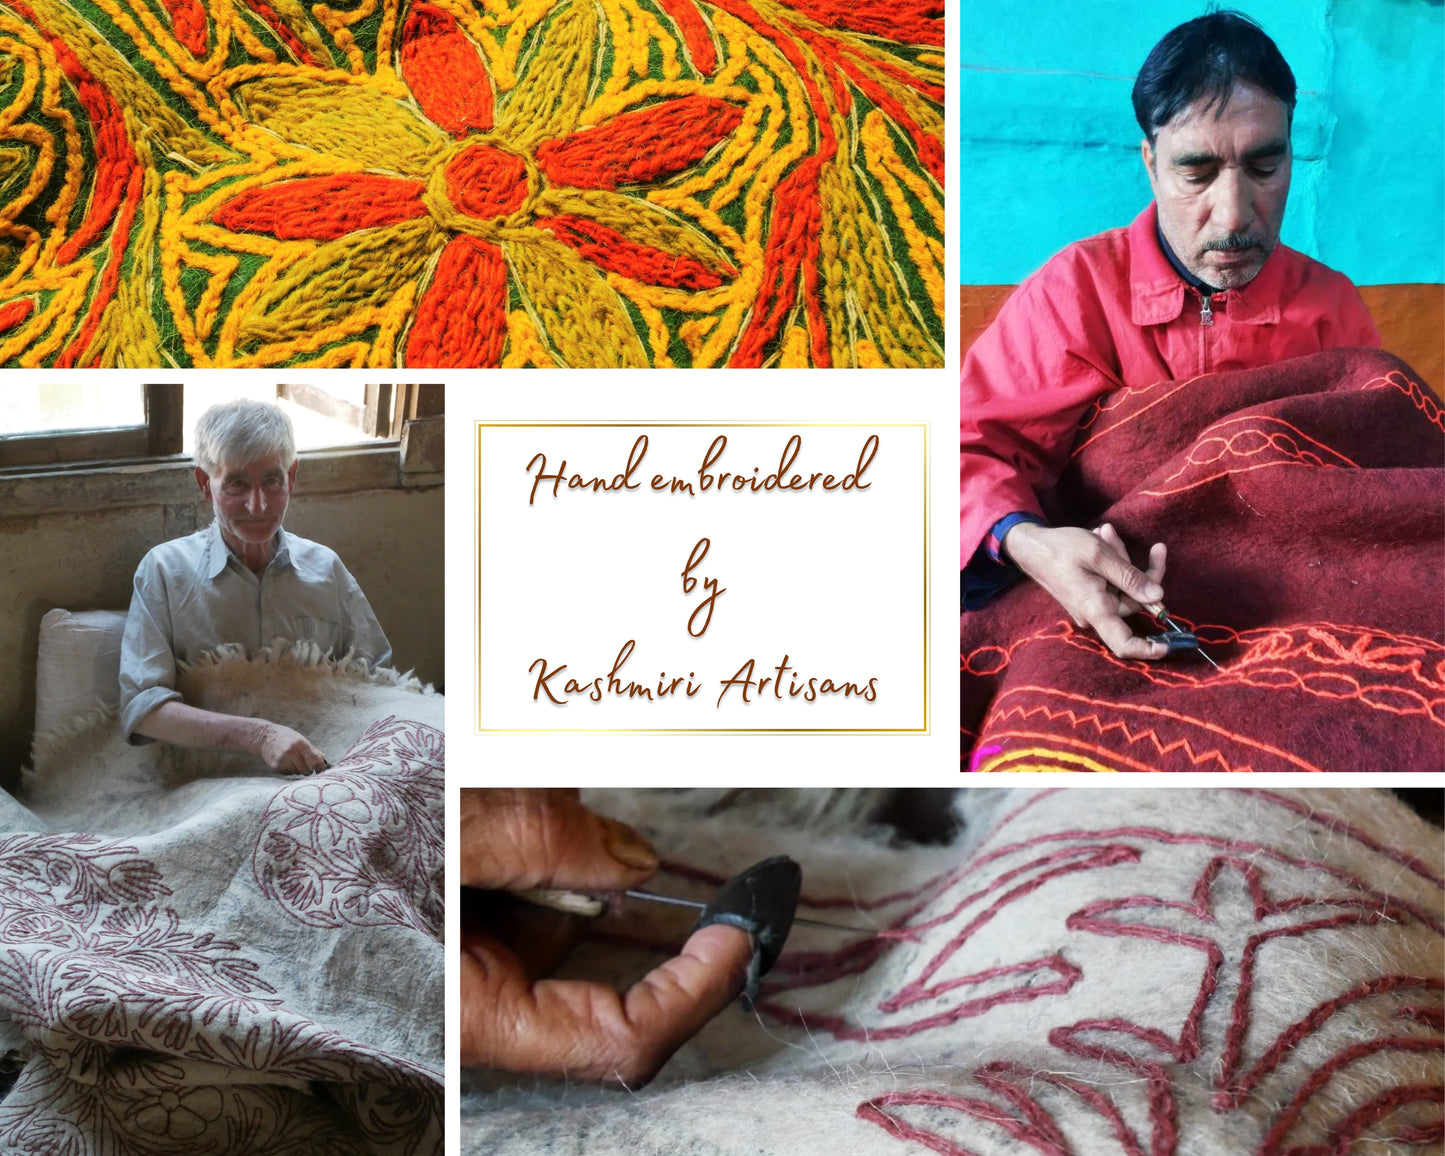 Indian runner rug - Yoga rug mat | Kashmiri "Namda" felted wool rug 2x6